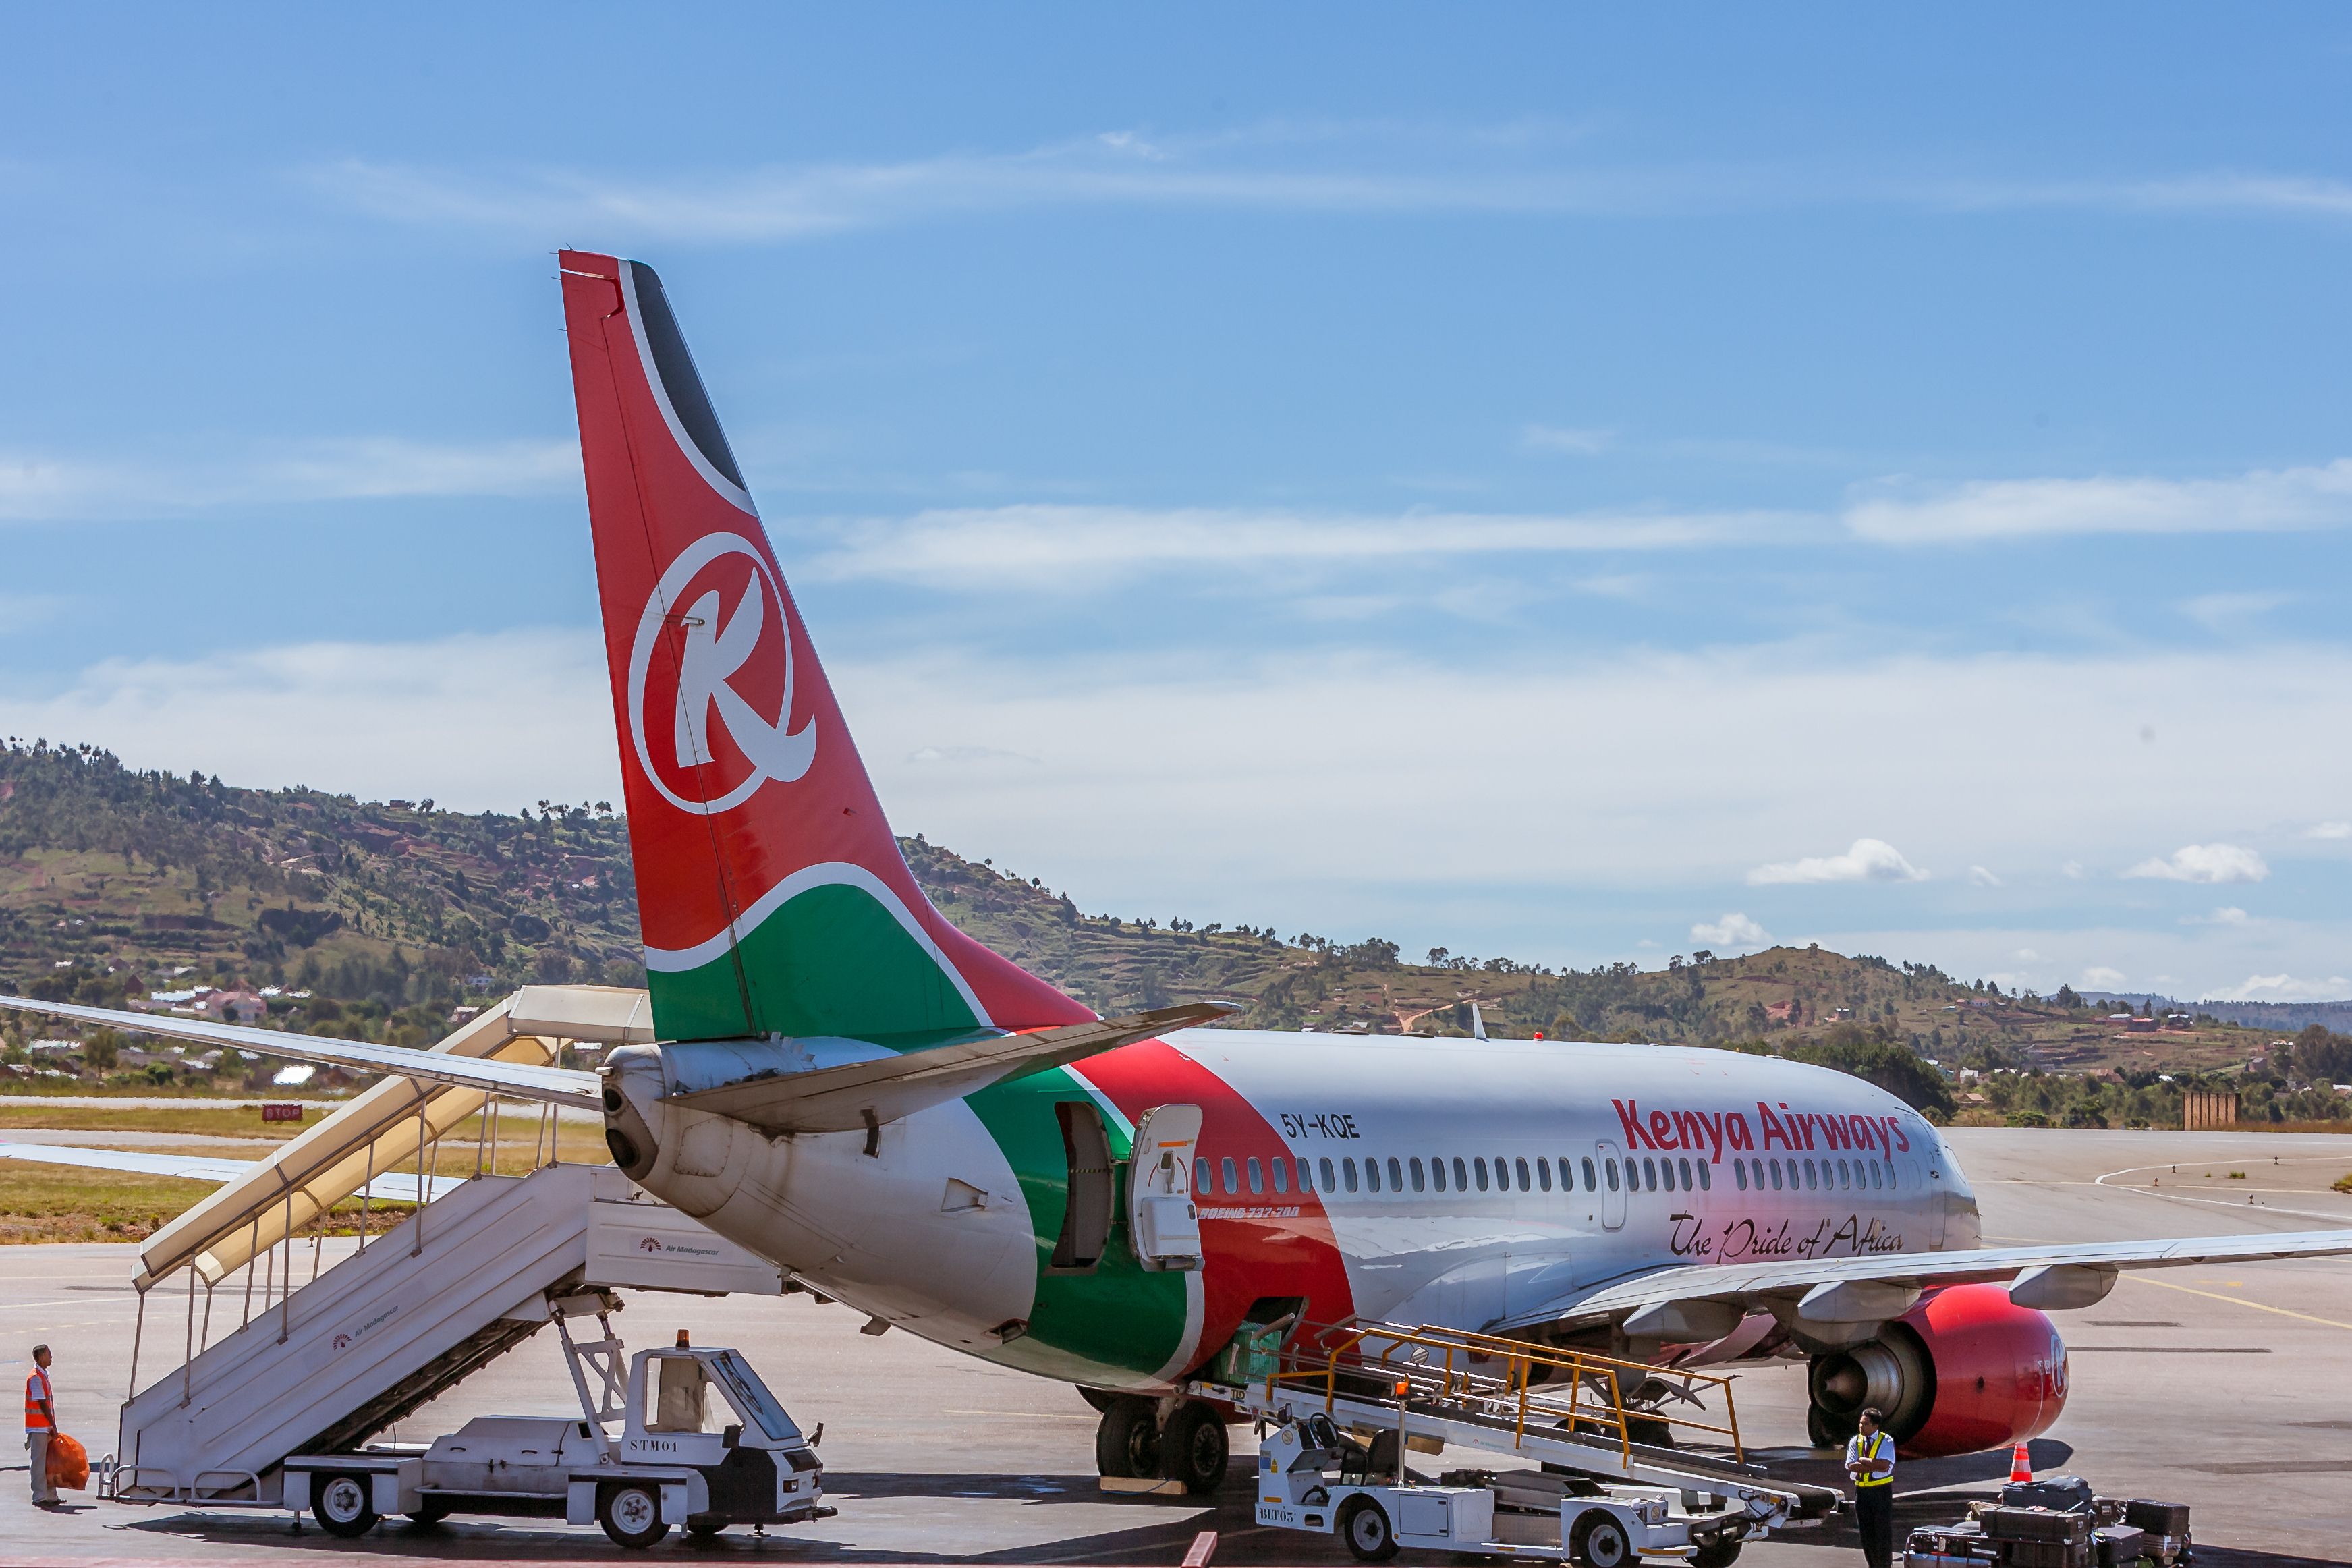 Kenya Airways Boeing 737 parked at an airfield.